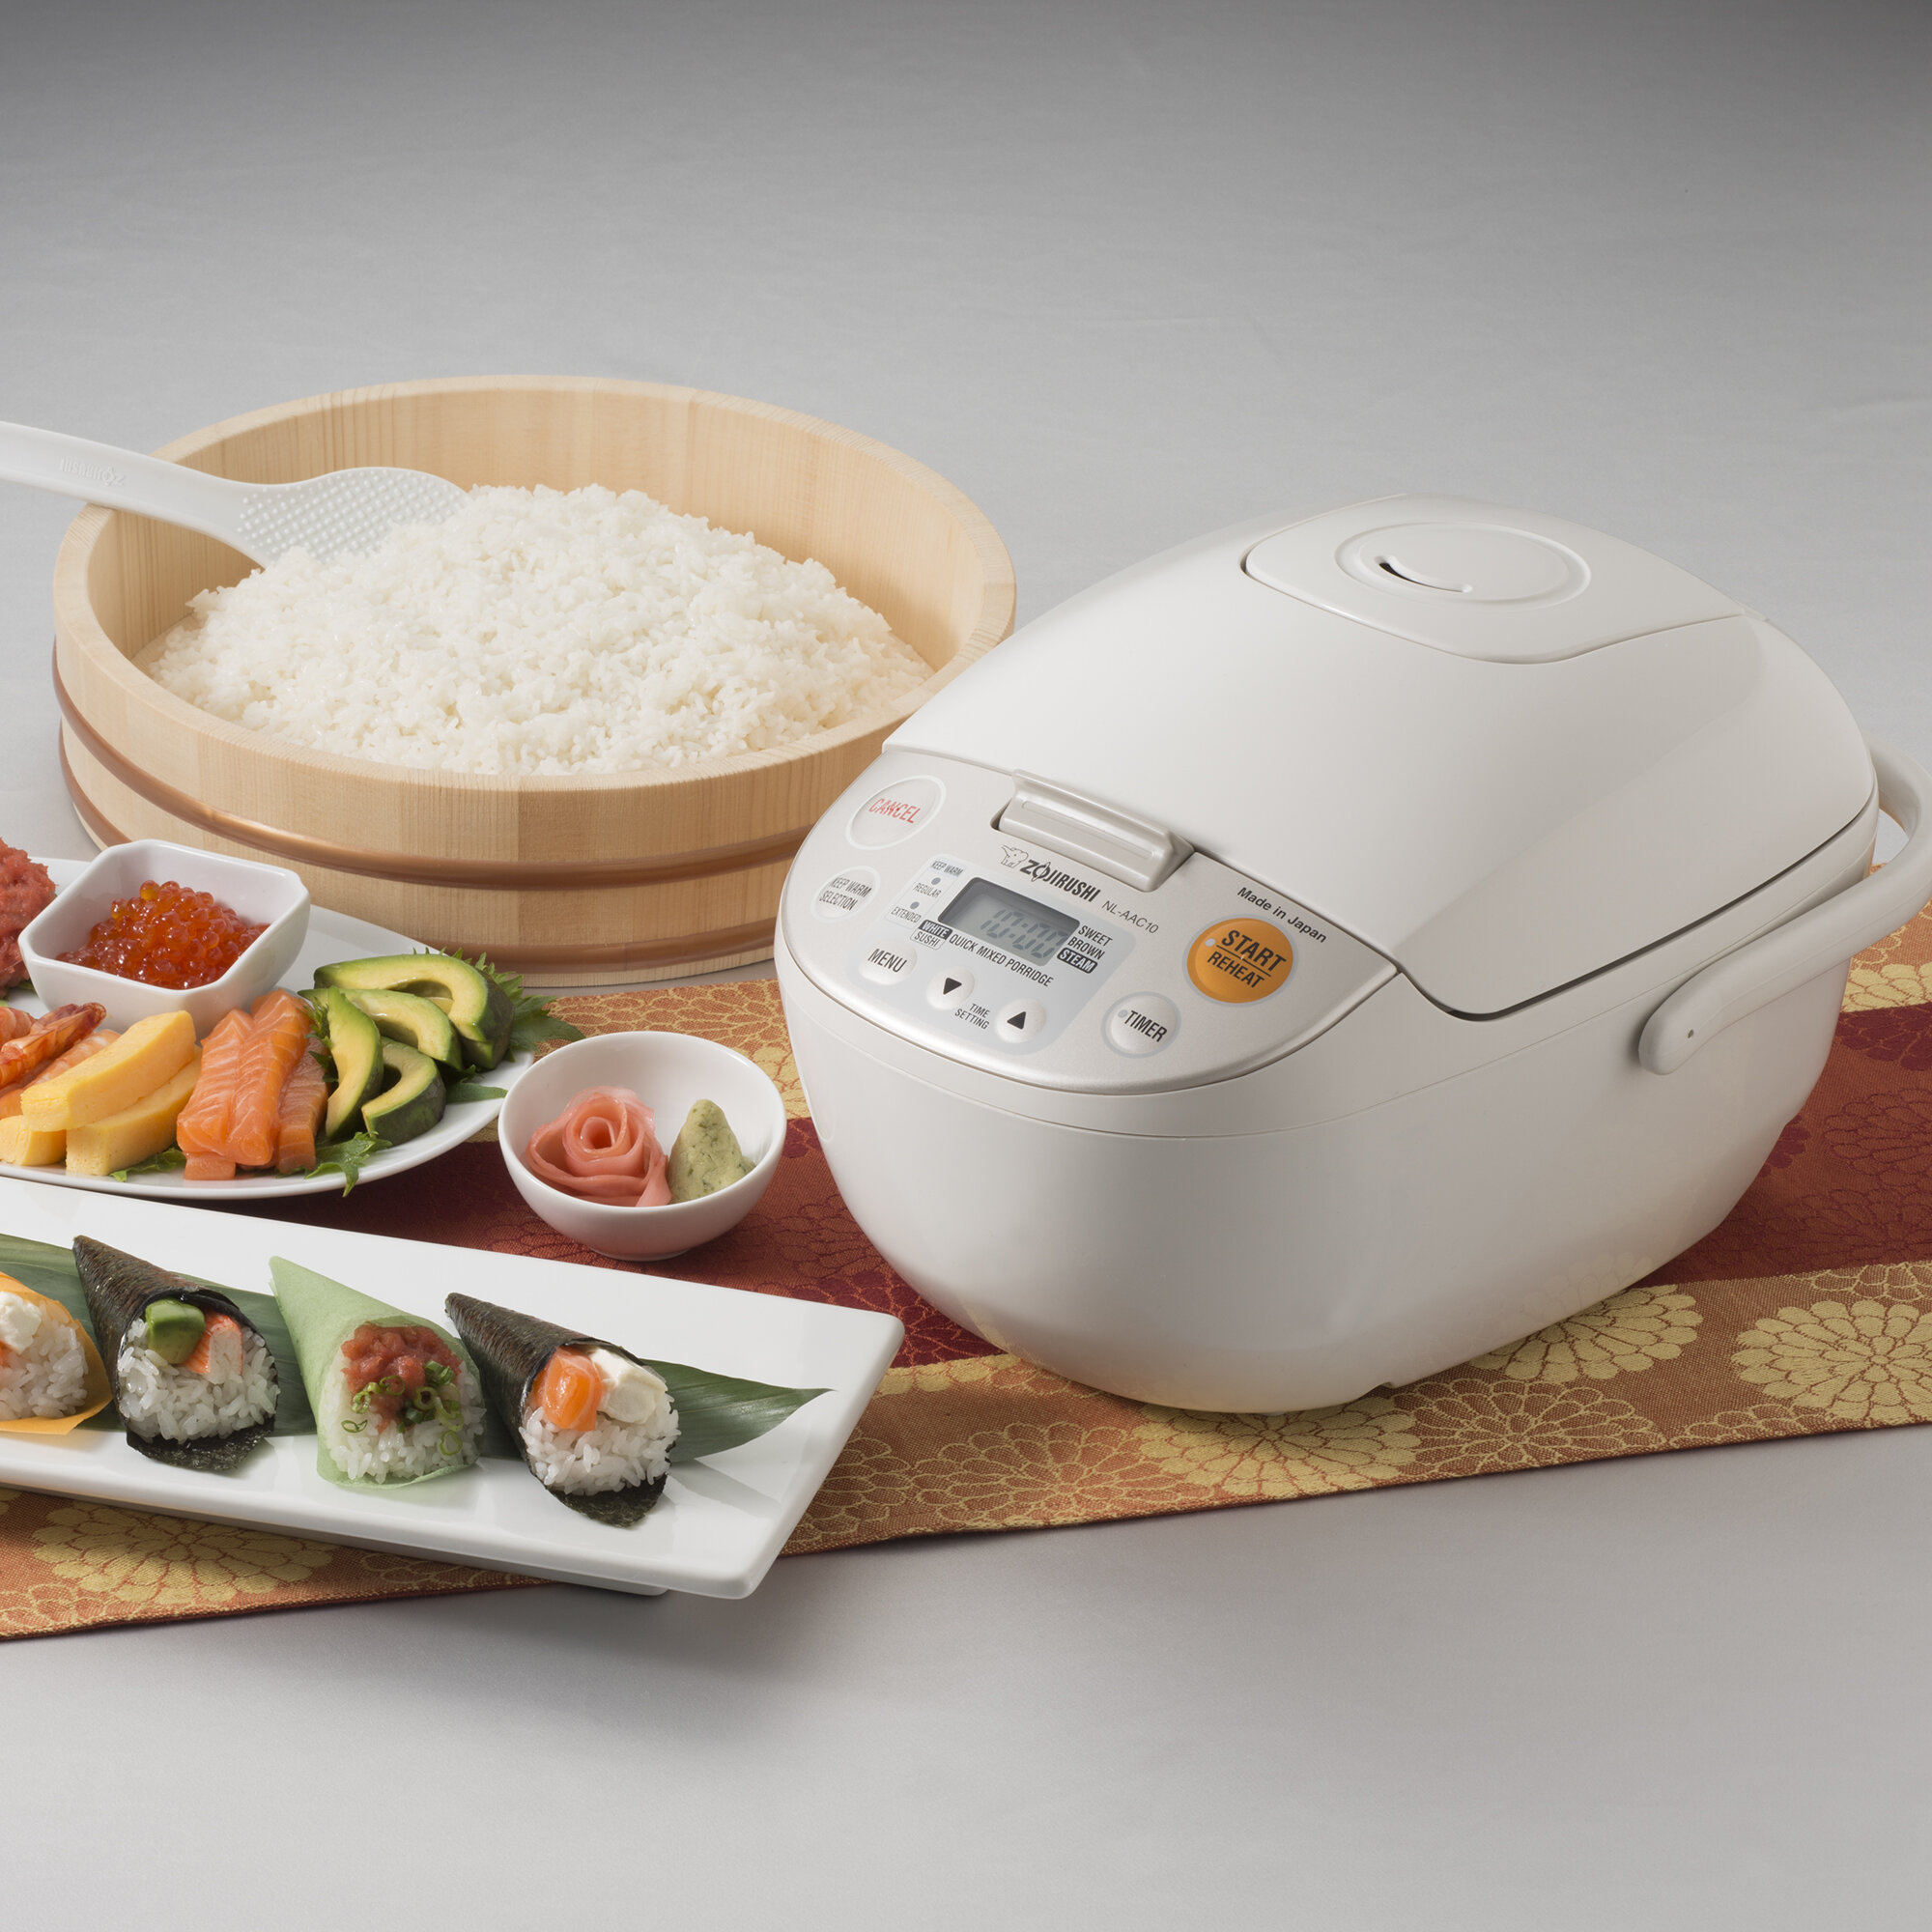 Zojirushi Micom Rice Cooker  Warmer, Beige, Made in Japan  Reviews  Wayfair